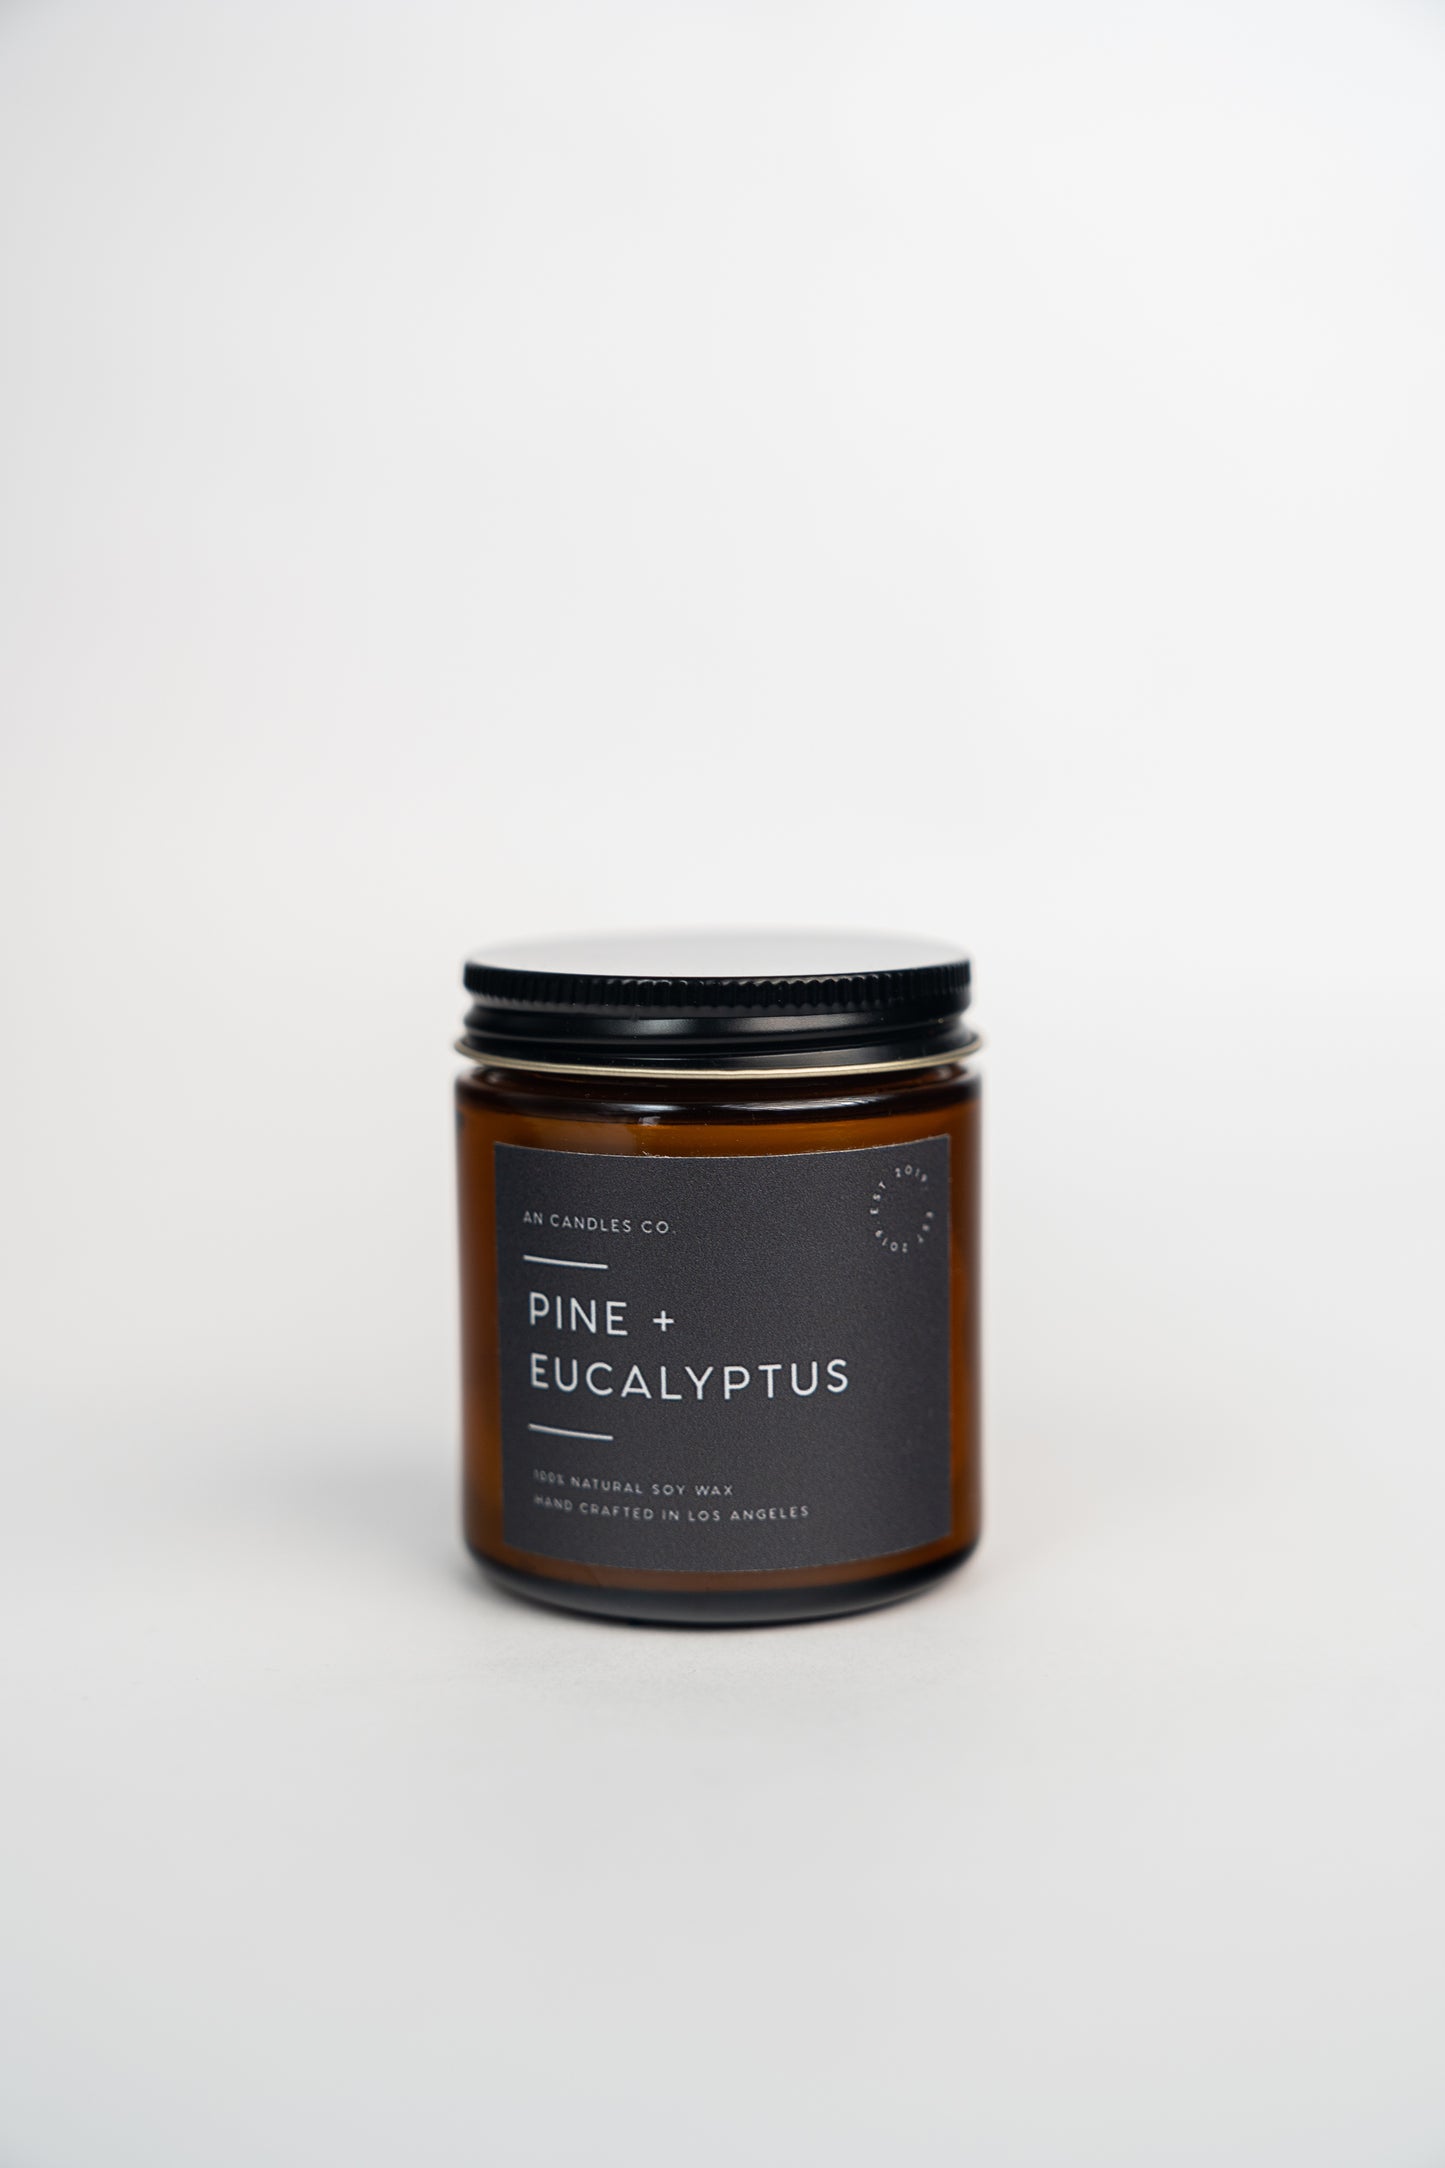 Pine + Eucalyptus Candle